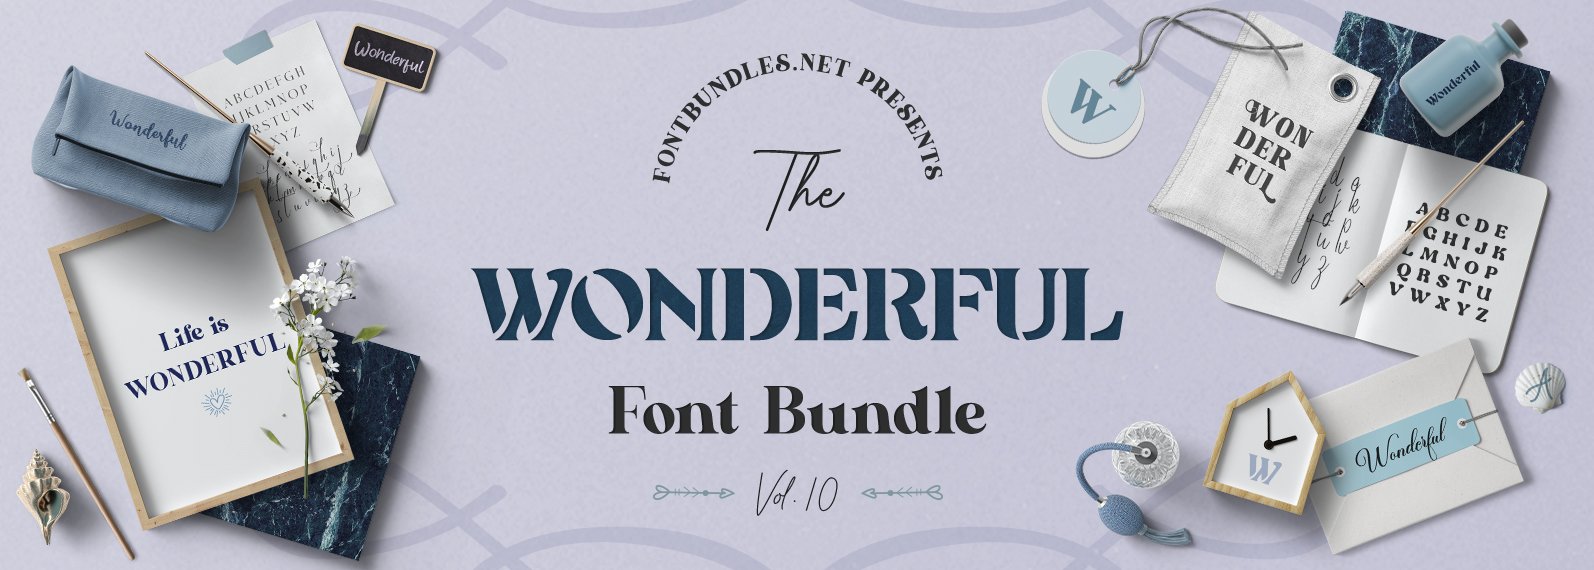 The Wonderful Font Bundle 10 Cover